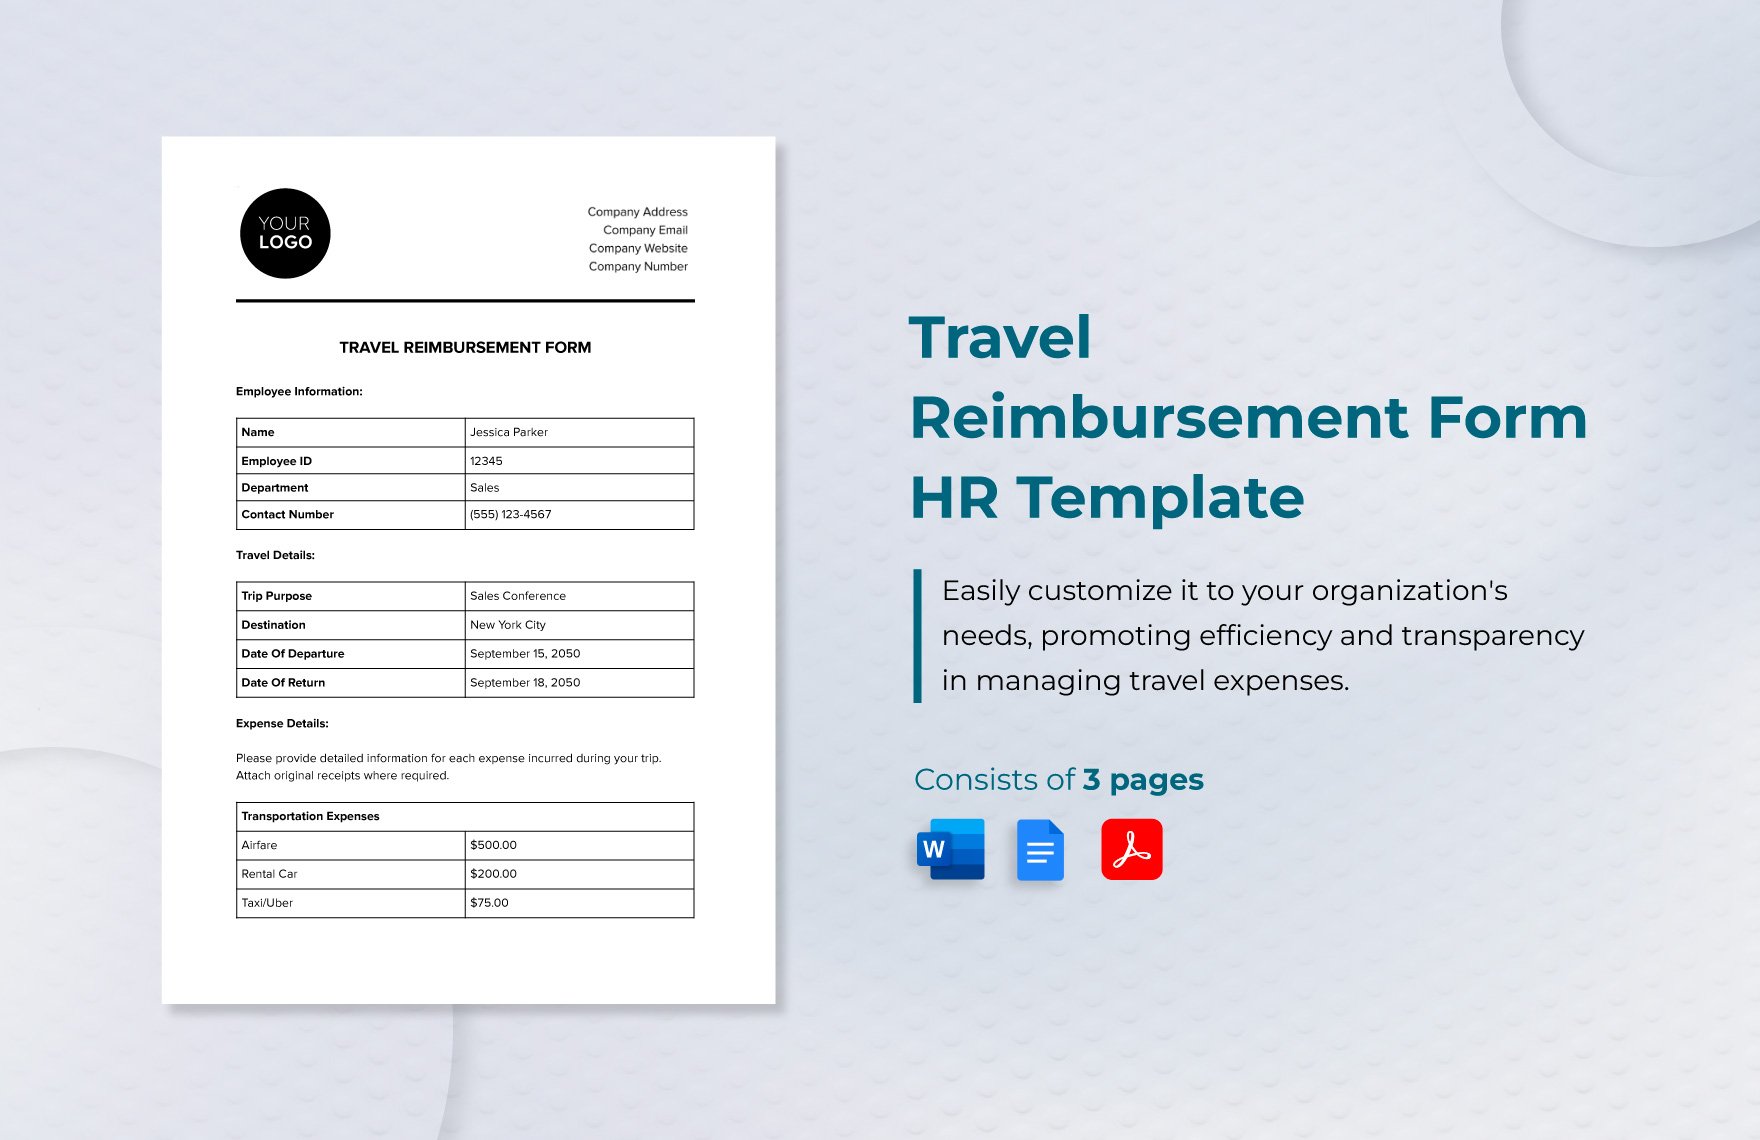 Travel Reimbursement Form HR Template in Word, Google Docs, PDF